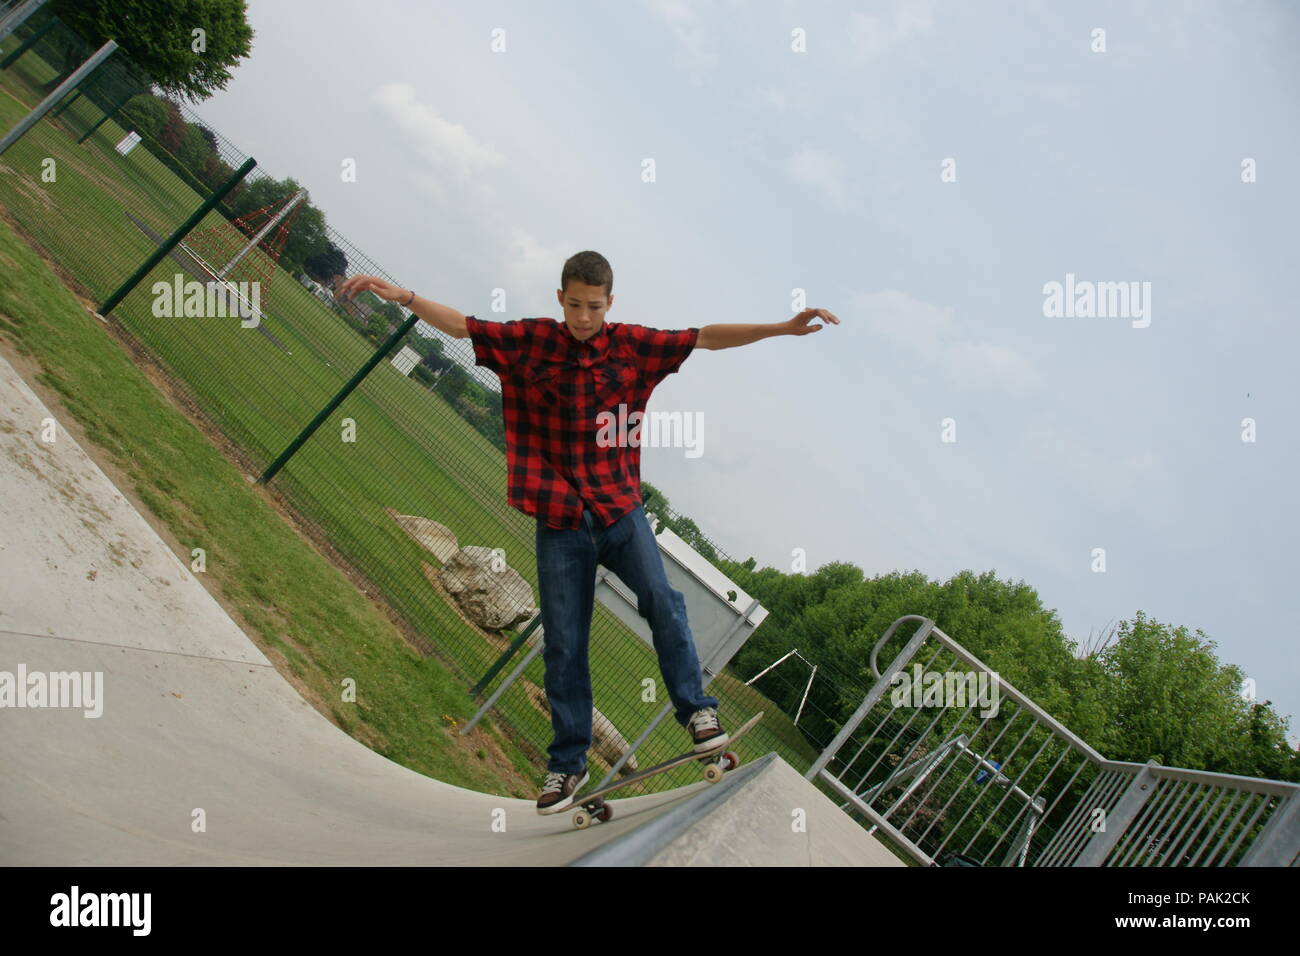 Skateboarding at a skate park Stock Photo